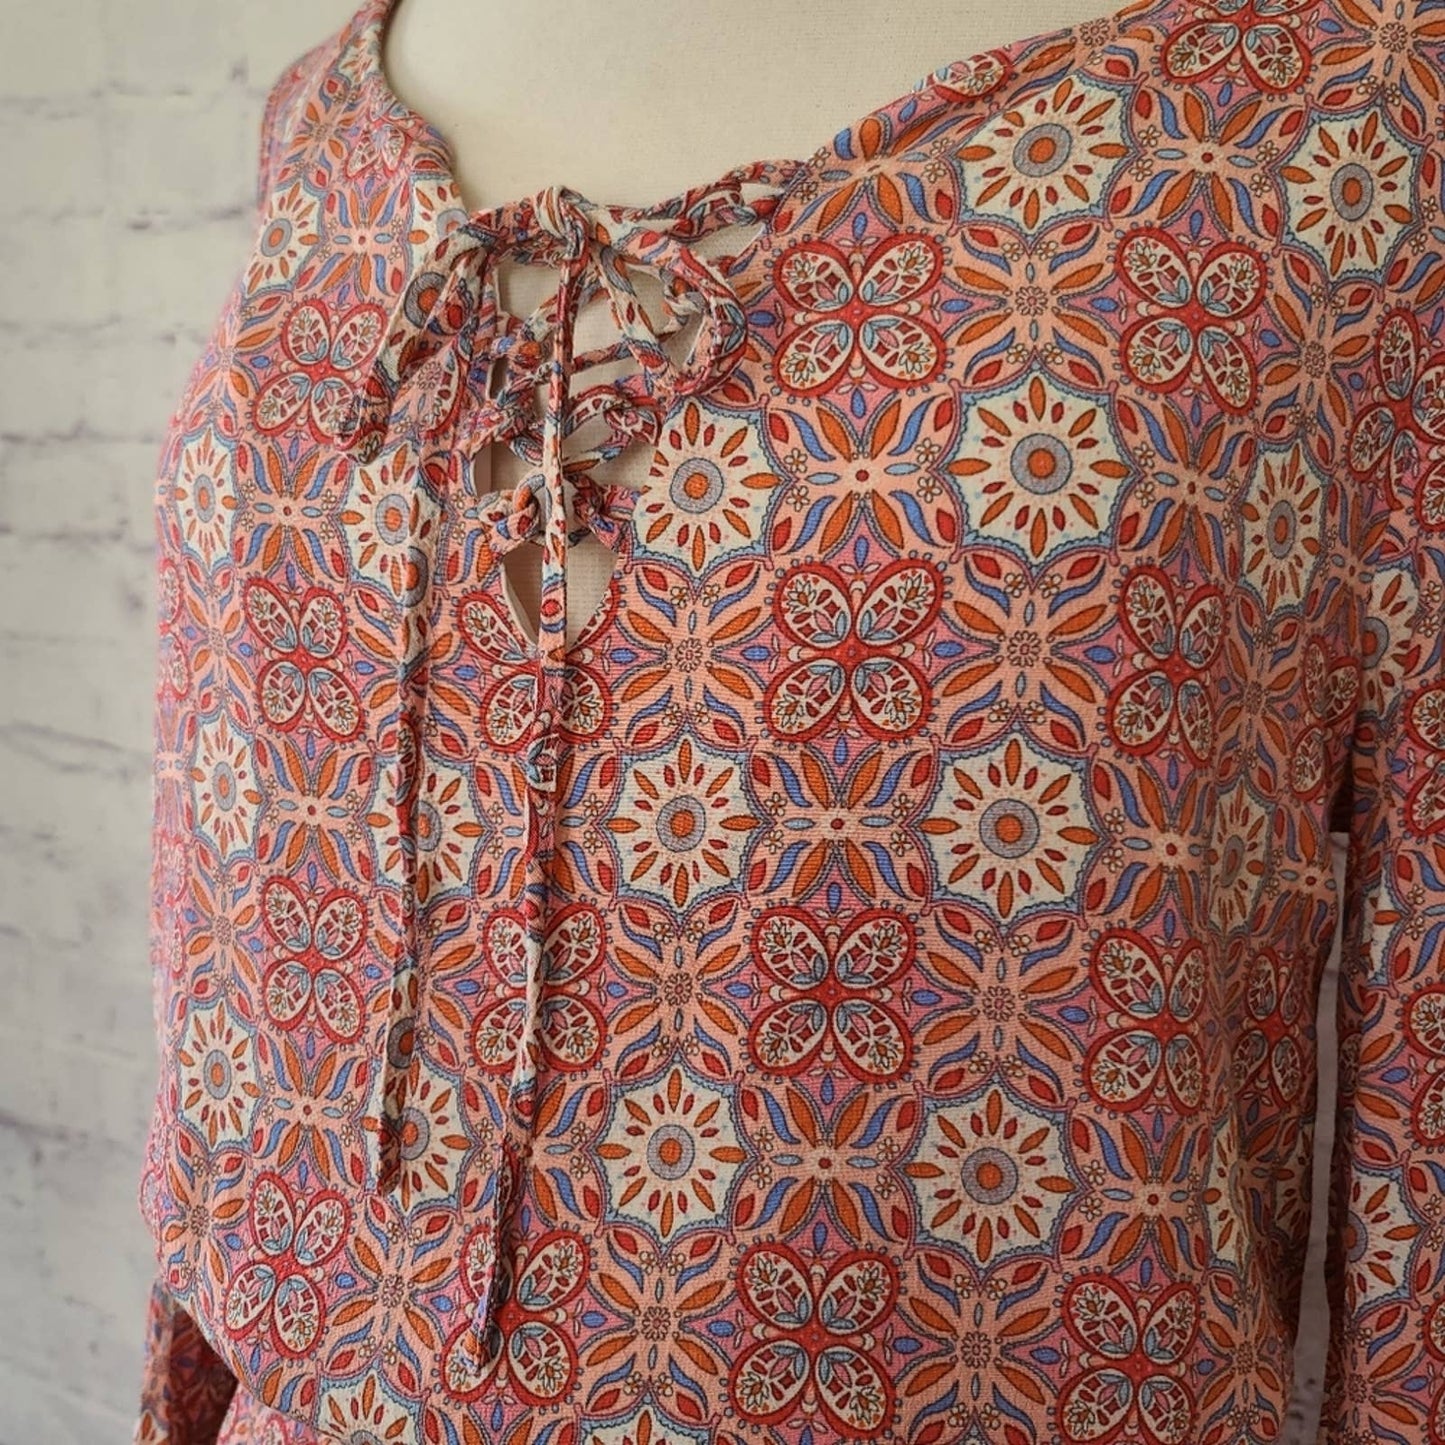 Sanctuary Floral Mosaic Print Long Bell Sleeve Lace-Up V-Neck Dress Medium